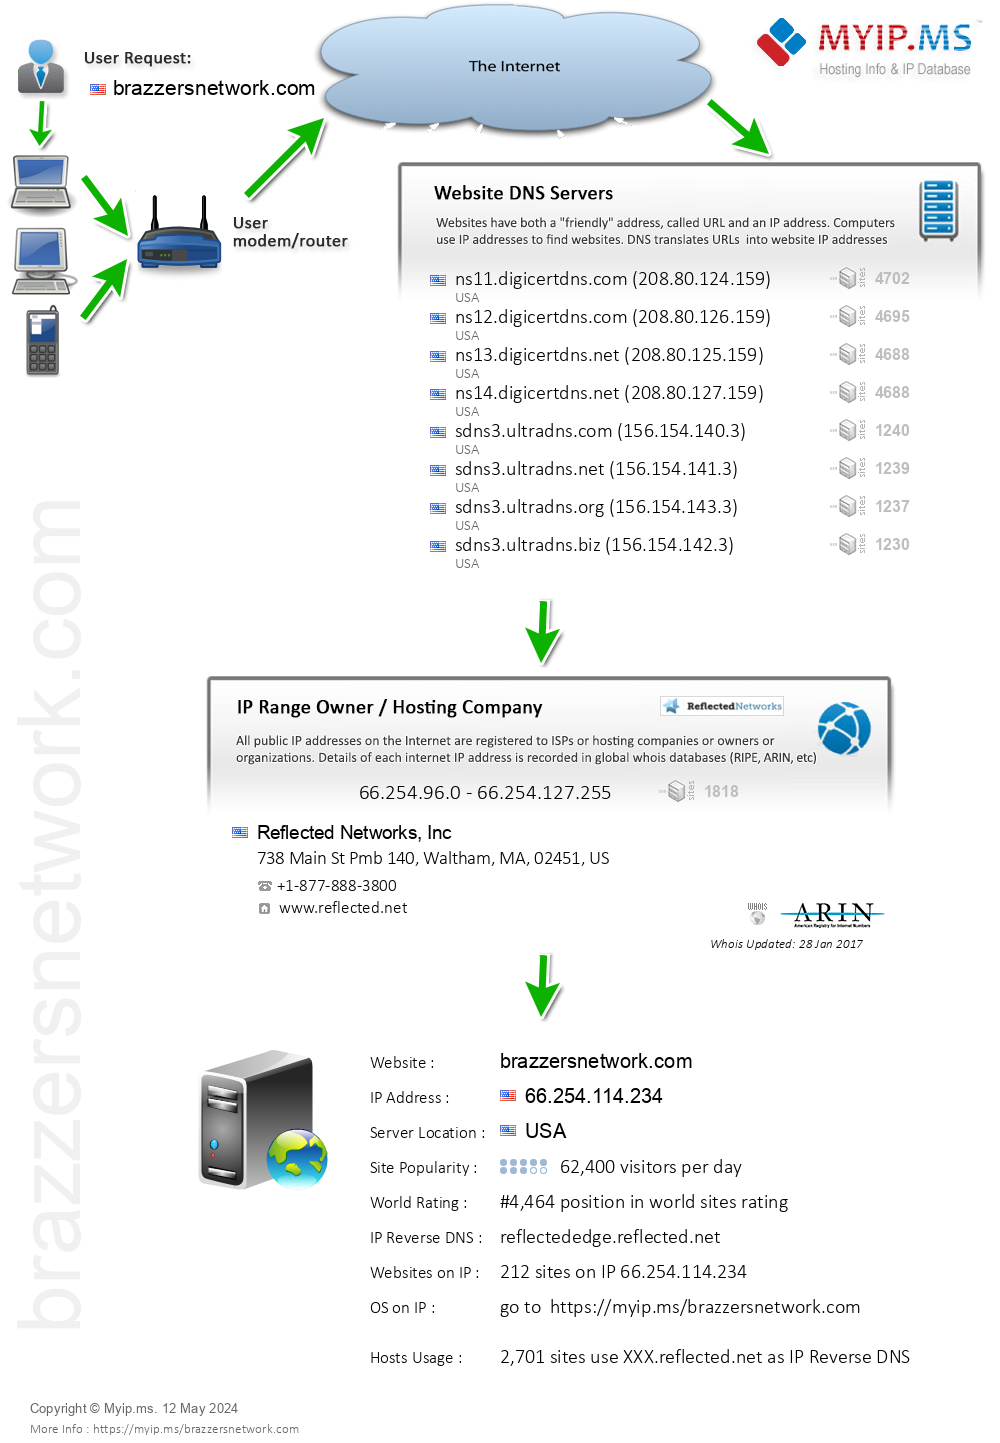 Brazzersnetwork.com - Website Hosting Visual IP Diagram